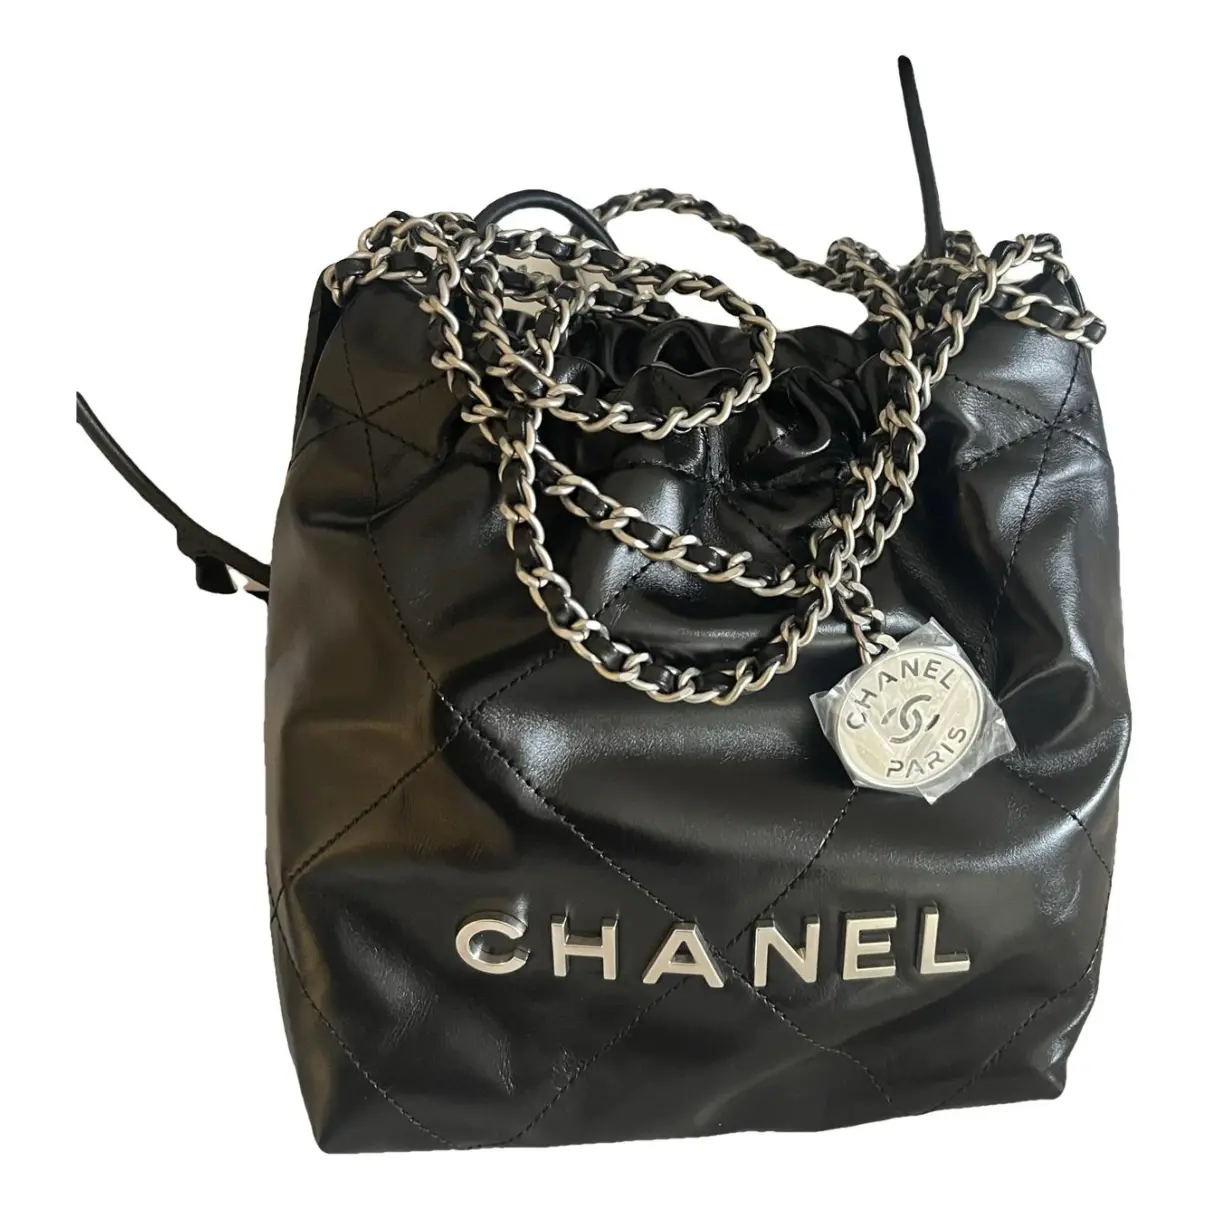 Chanel 22 leather crossbody bag